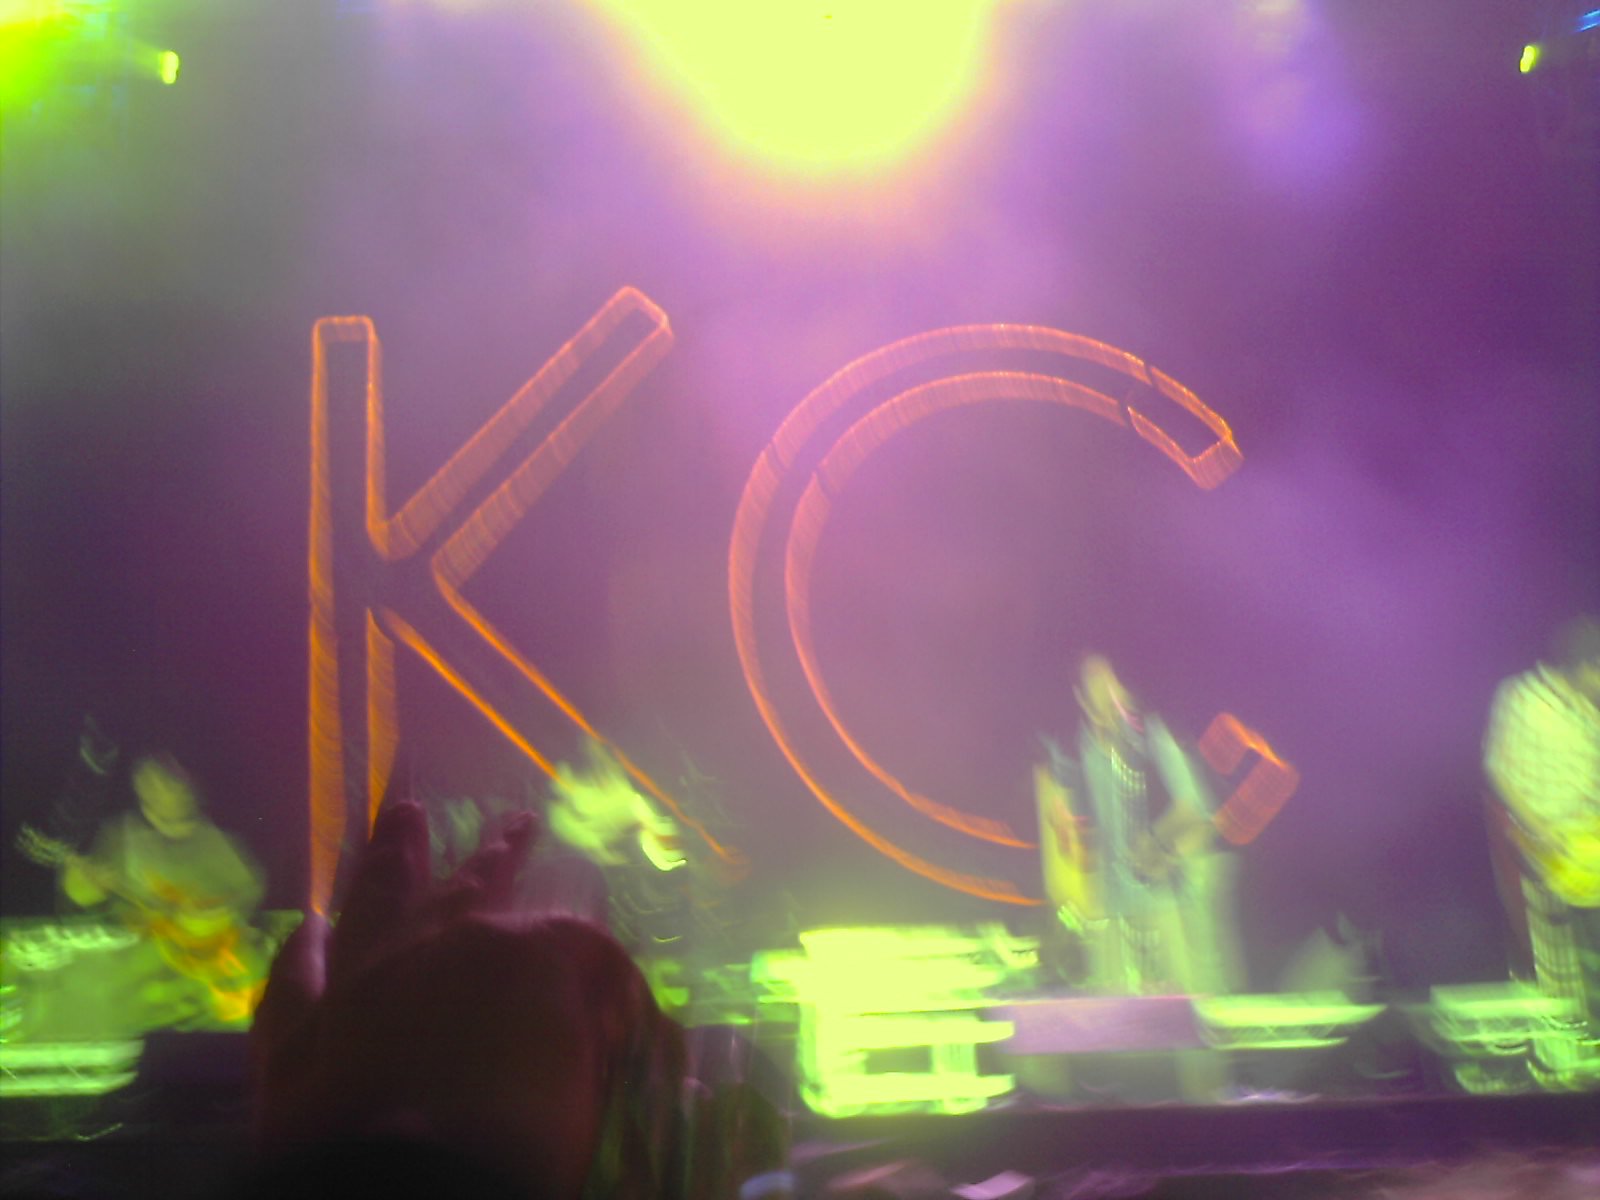 KC blurred shot